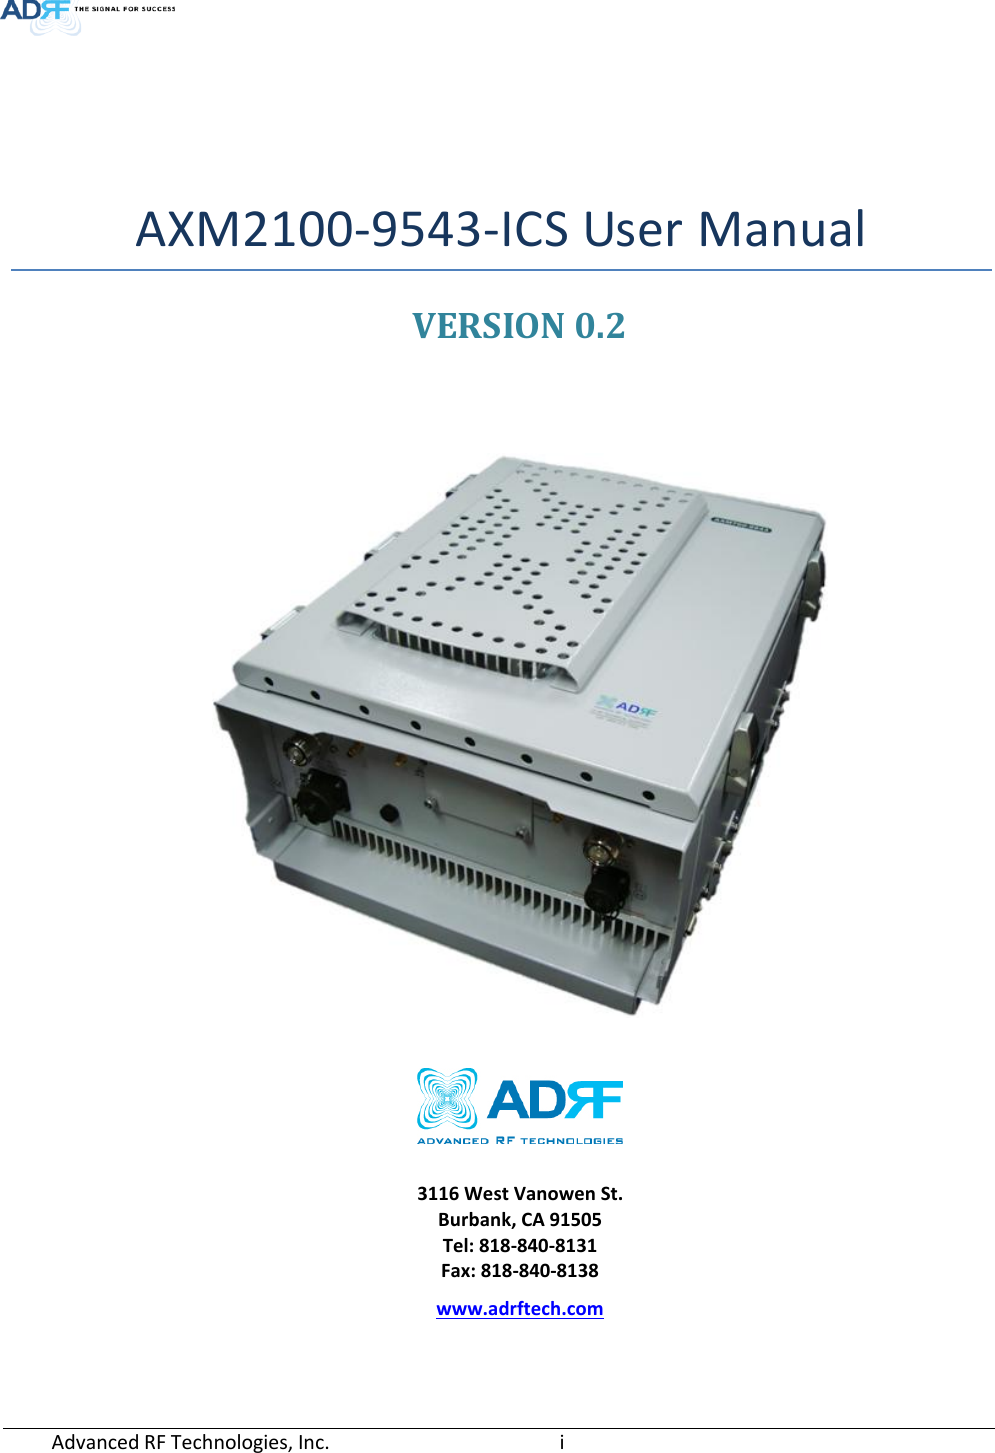   AXM2100-9543-ICS User Manual VERSION 0.2        3116 West Vanowen St. Burbank, CA 91505 Tel: 818-840-8131 Fax: 818-840-8138 www.adrftech.com Advanced RF Technologies, Inc.        i    